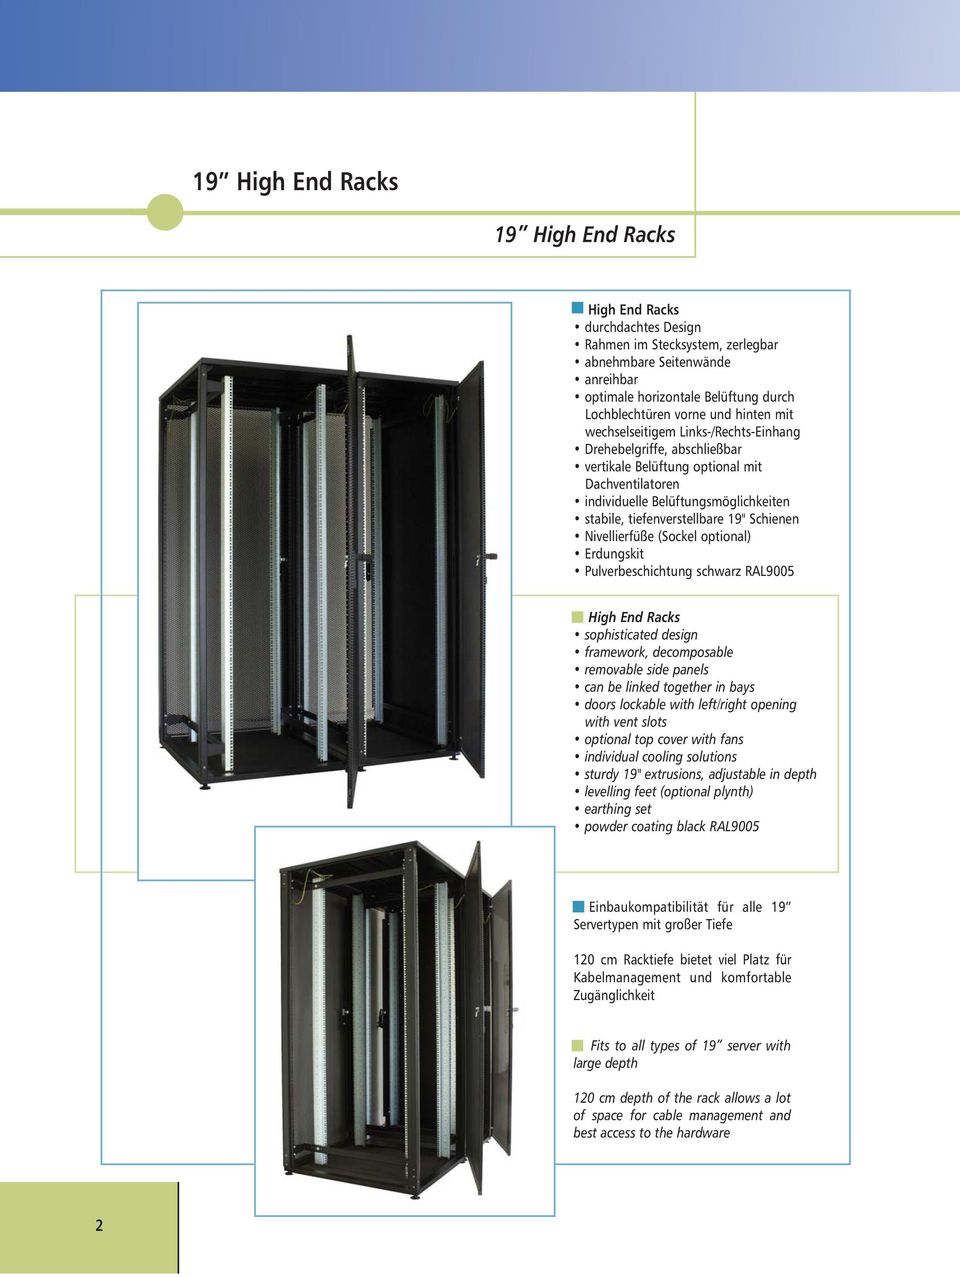 (Sockel optional) Erdungskit Pulverbeschichtung schwarz RAL9005 High End Racks sophisticated design framework, decomposable removable side panels can be linked together in bays doors lockable with